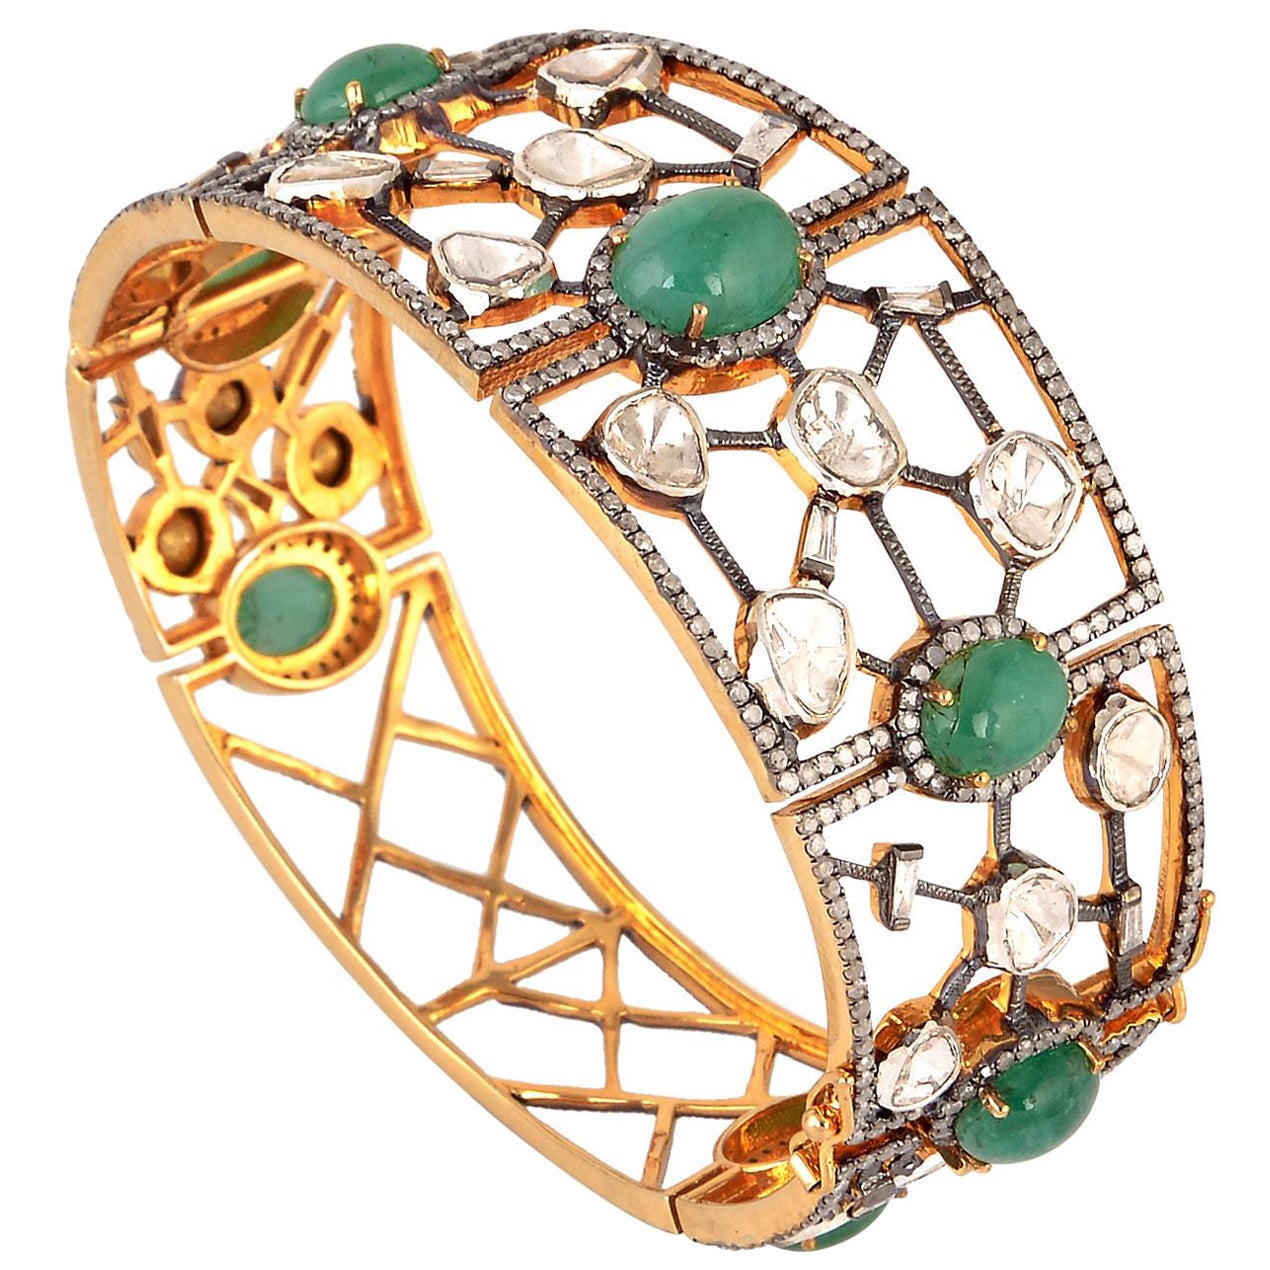 Handgefertigter Smaragd-Diamant-Armreif aus 18 Karat Gold und Silber